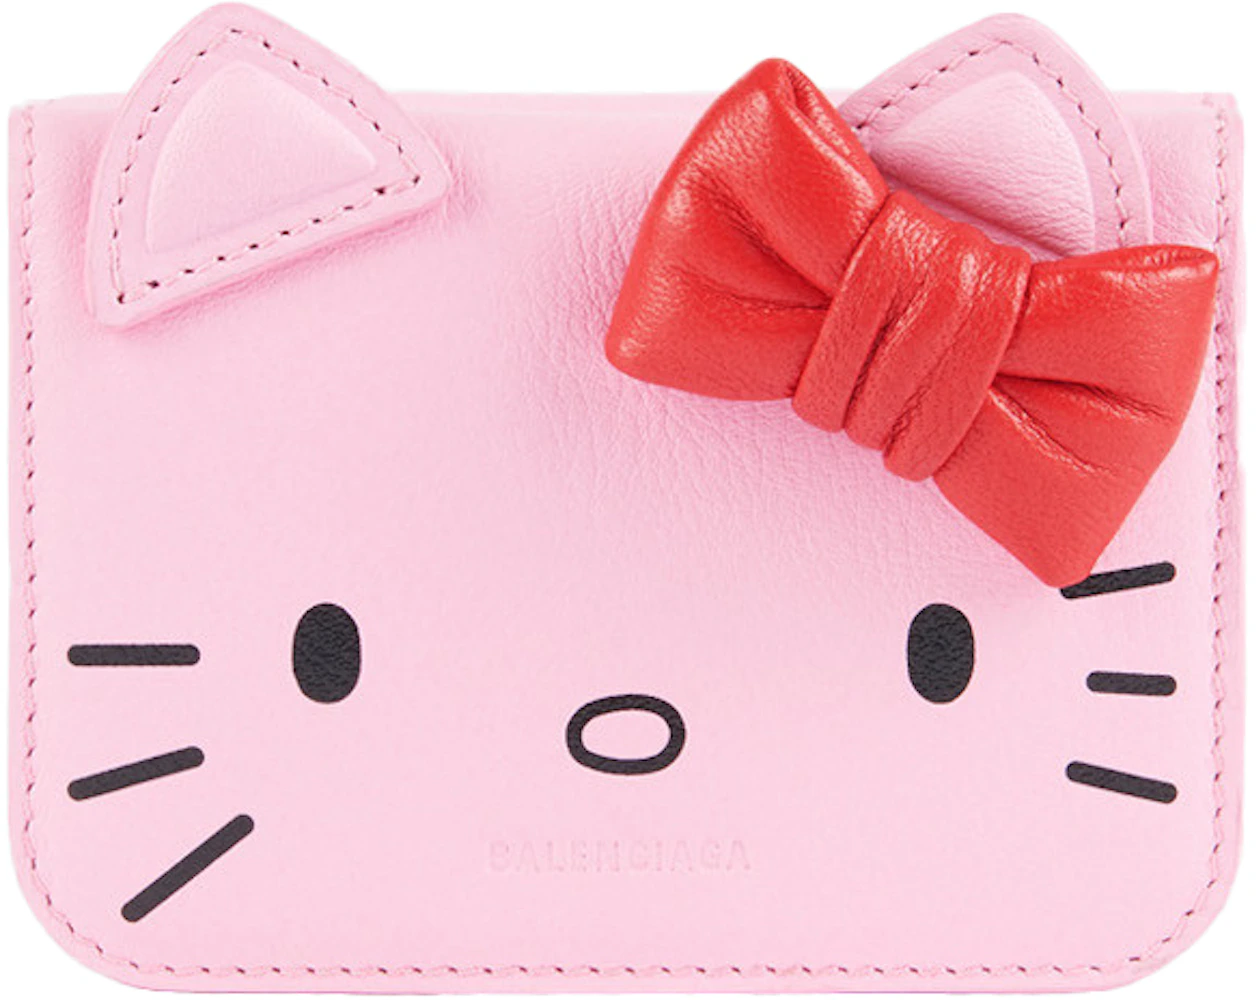 Balenciaga x Hello Kitty Wallet Mini Pink in Calfskin with Silver